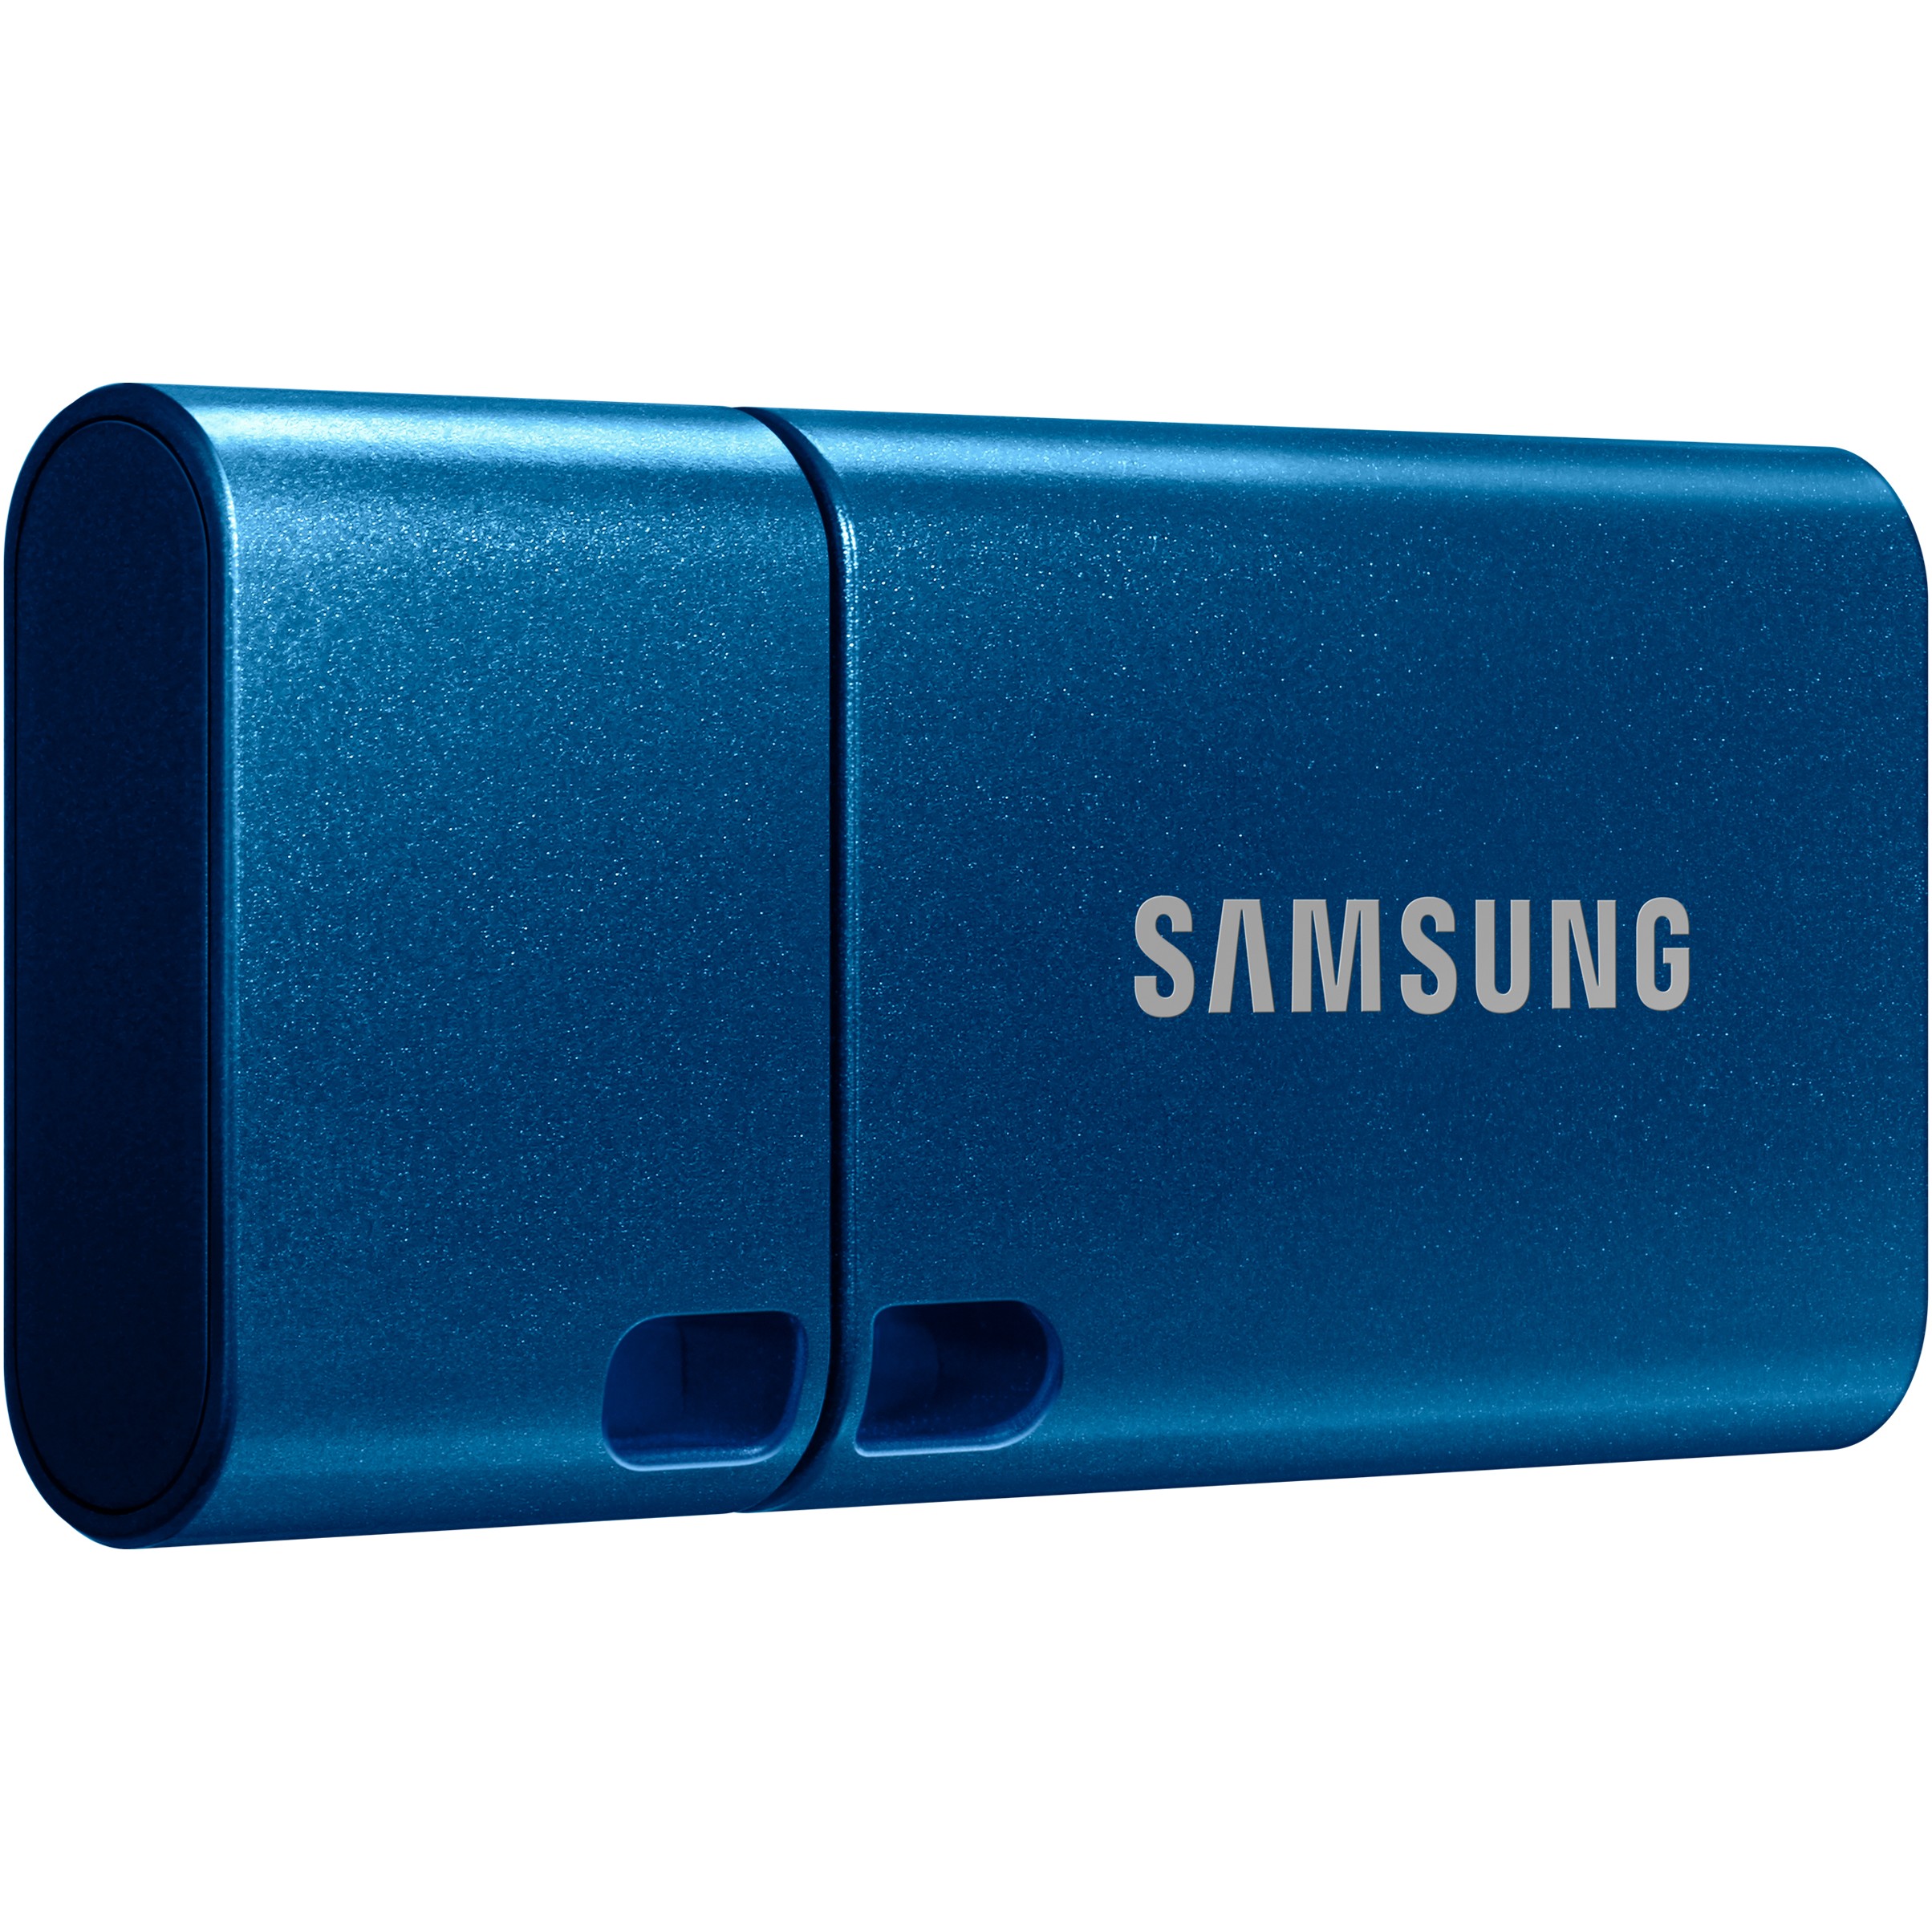 SAMSUNG MUF-256DA/APC, USB-Stick, Samsung MUF-256DA USB  (BILD3)